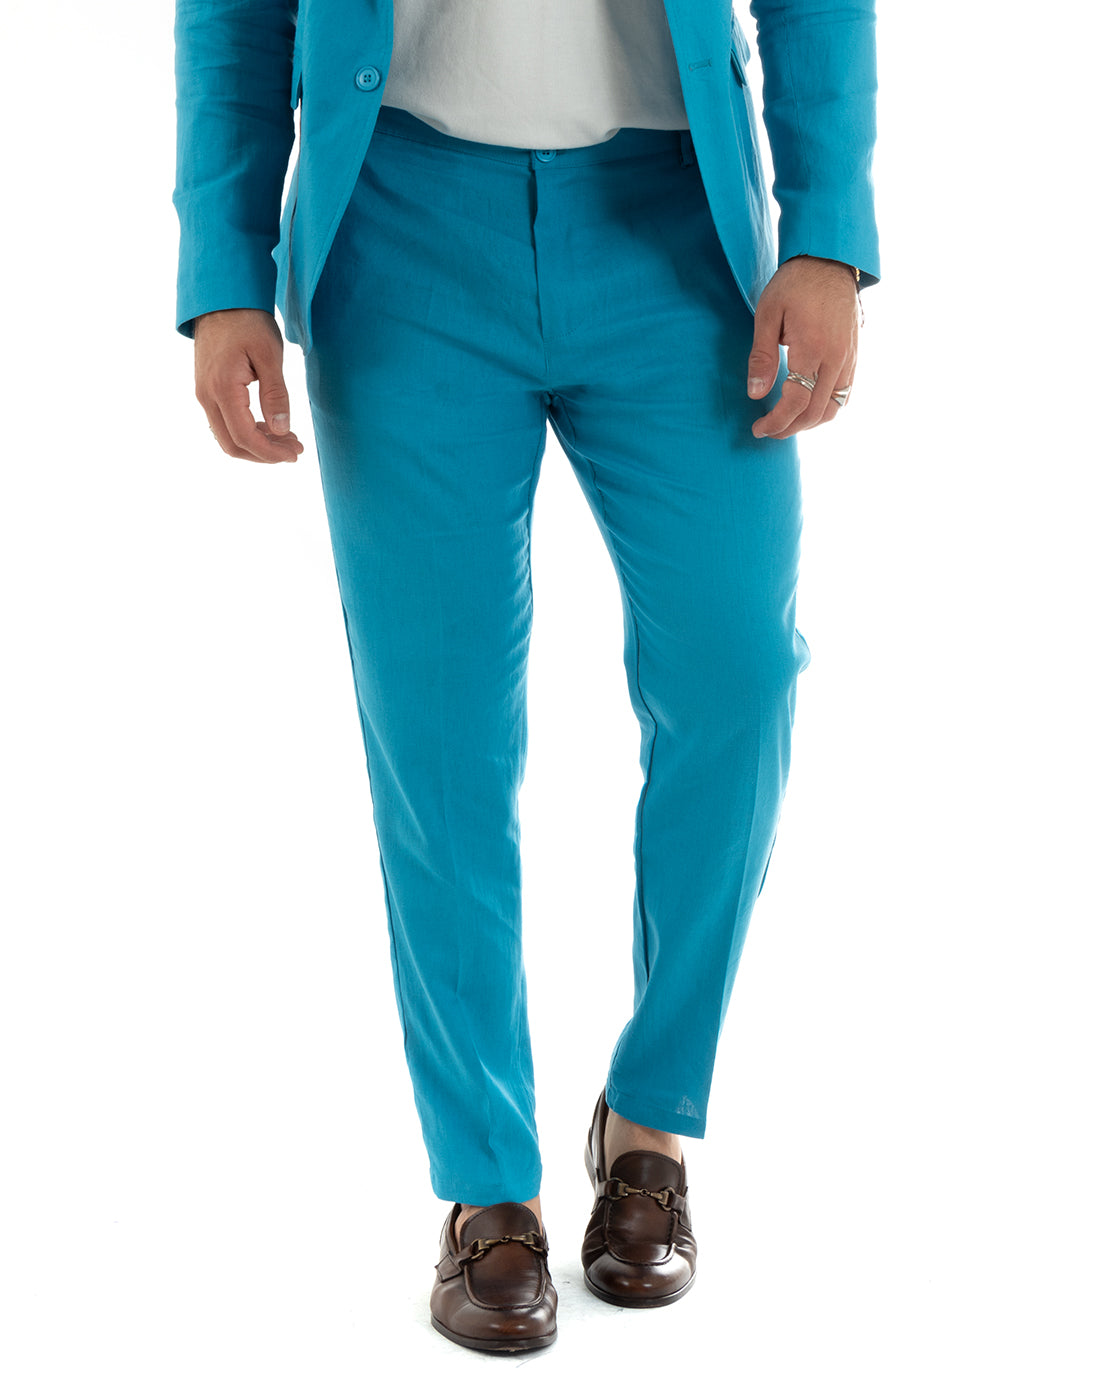 Single Breasted Men's Suit Linen Suit Suit Jacket Trousers Turquoise Elegant Ceremony GIOSAL-OU2304A